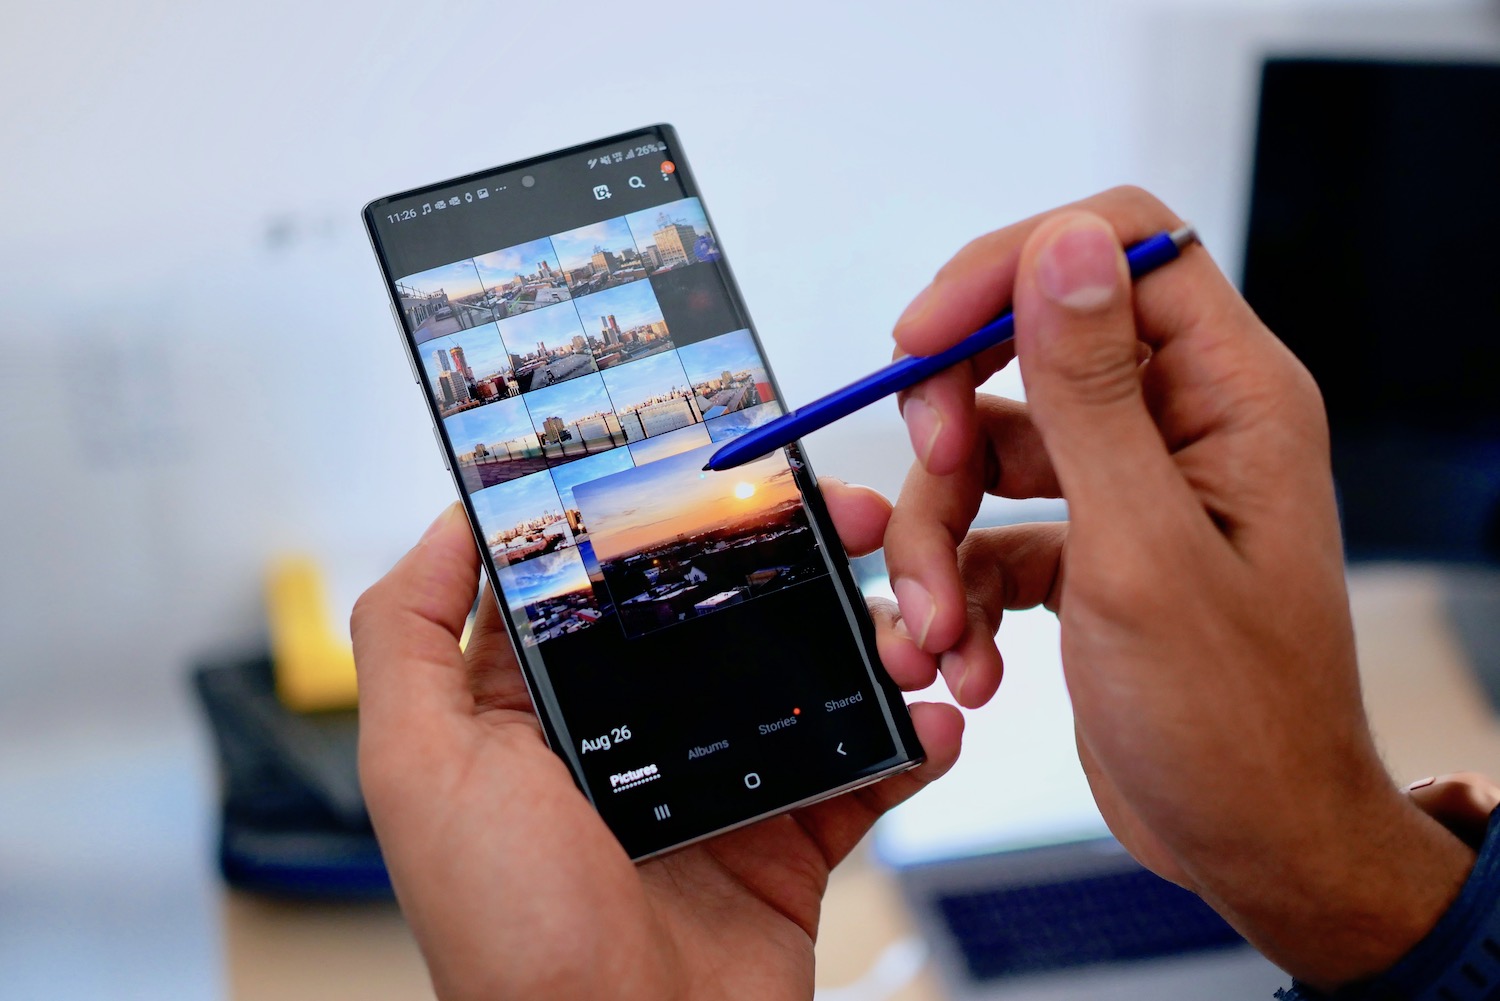 Samsung Galaxy Note 10 Plus FAQ - All questions answered - Smartprix Bytes